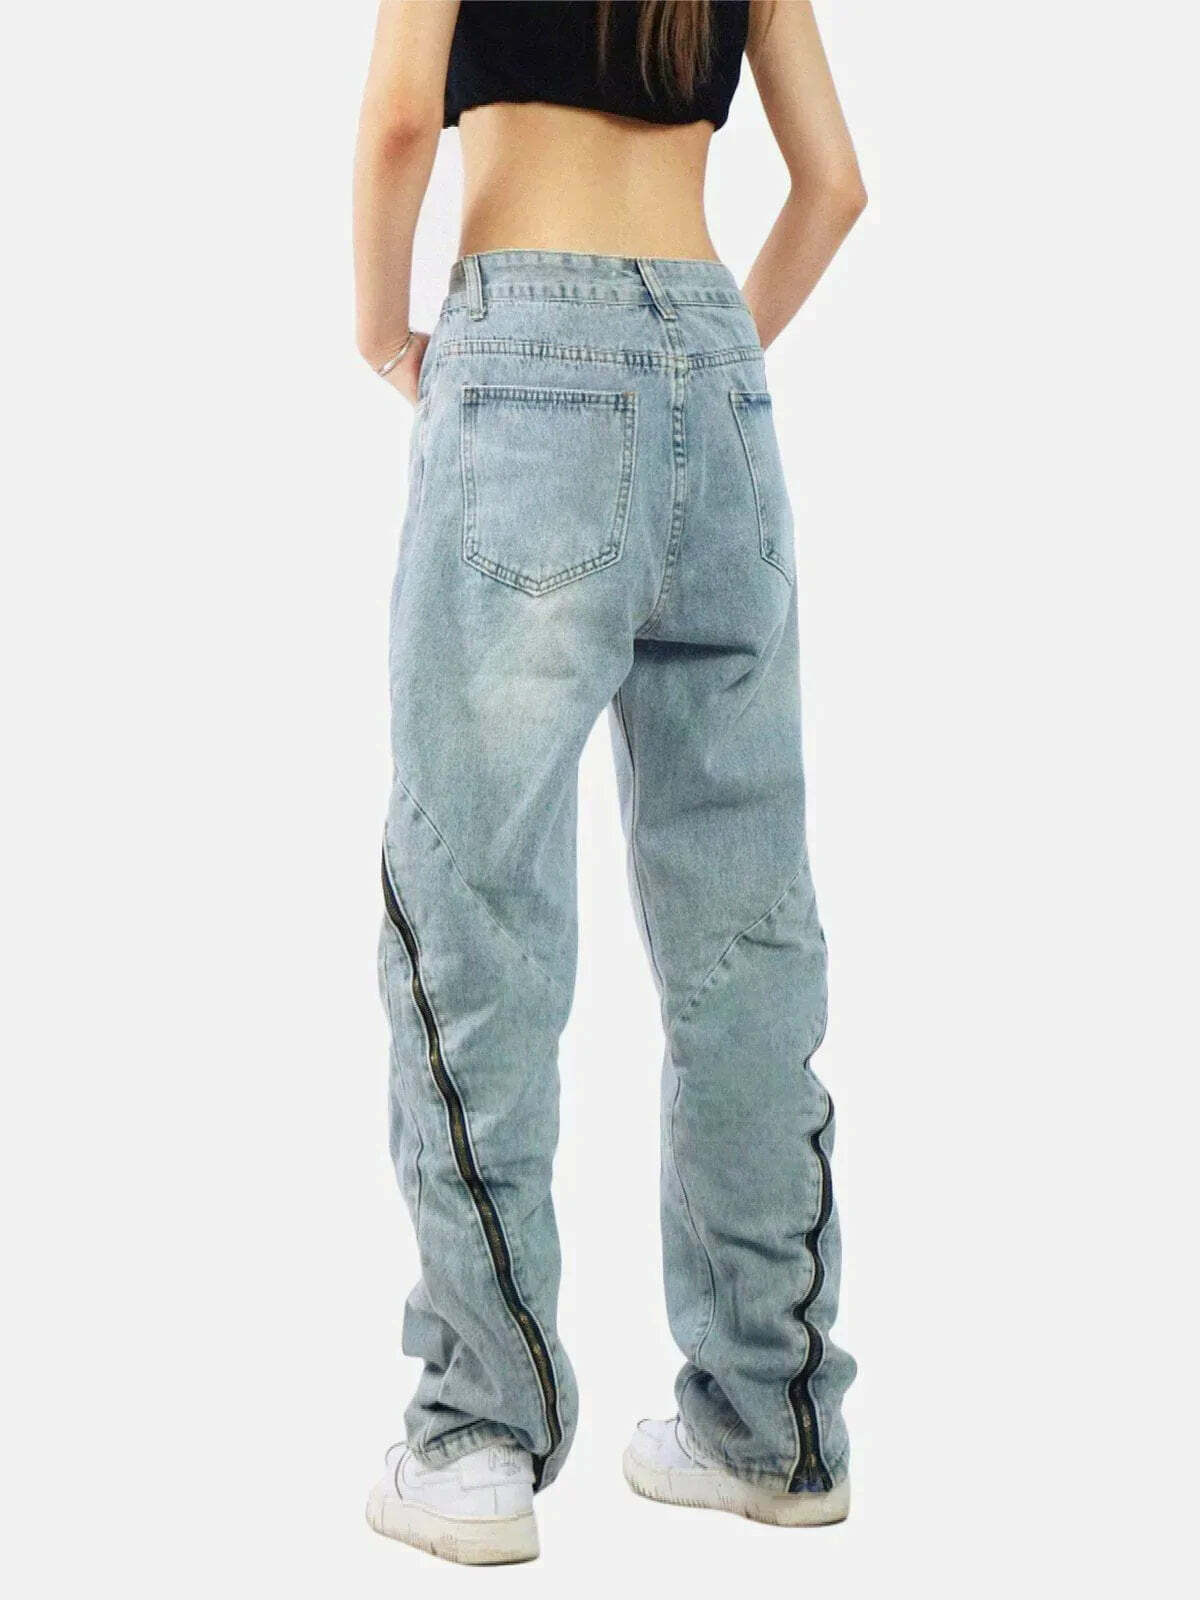 retro wash zip jeans adjustable fit & vintage vibes 5465